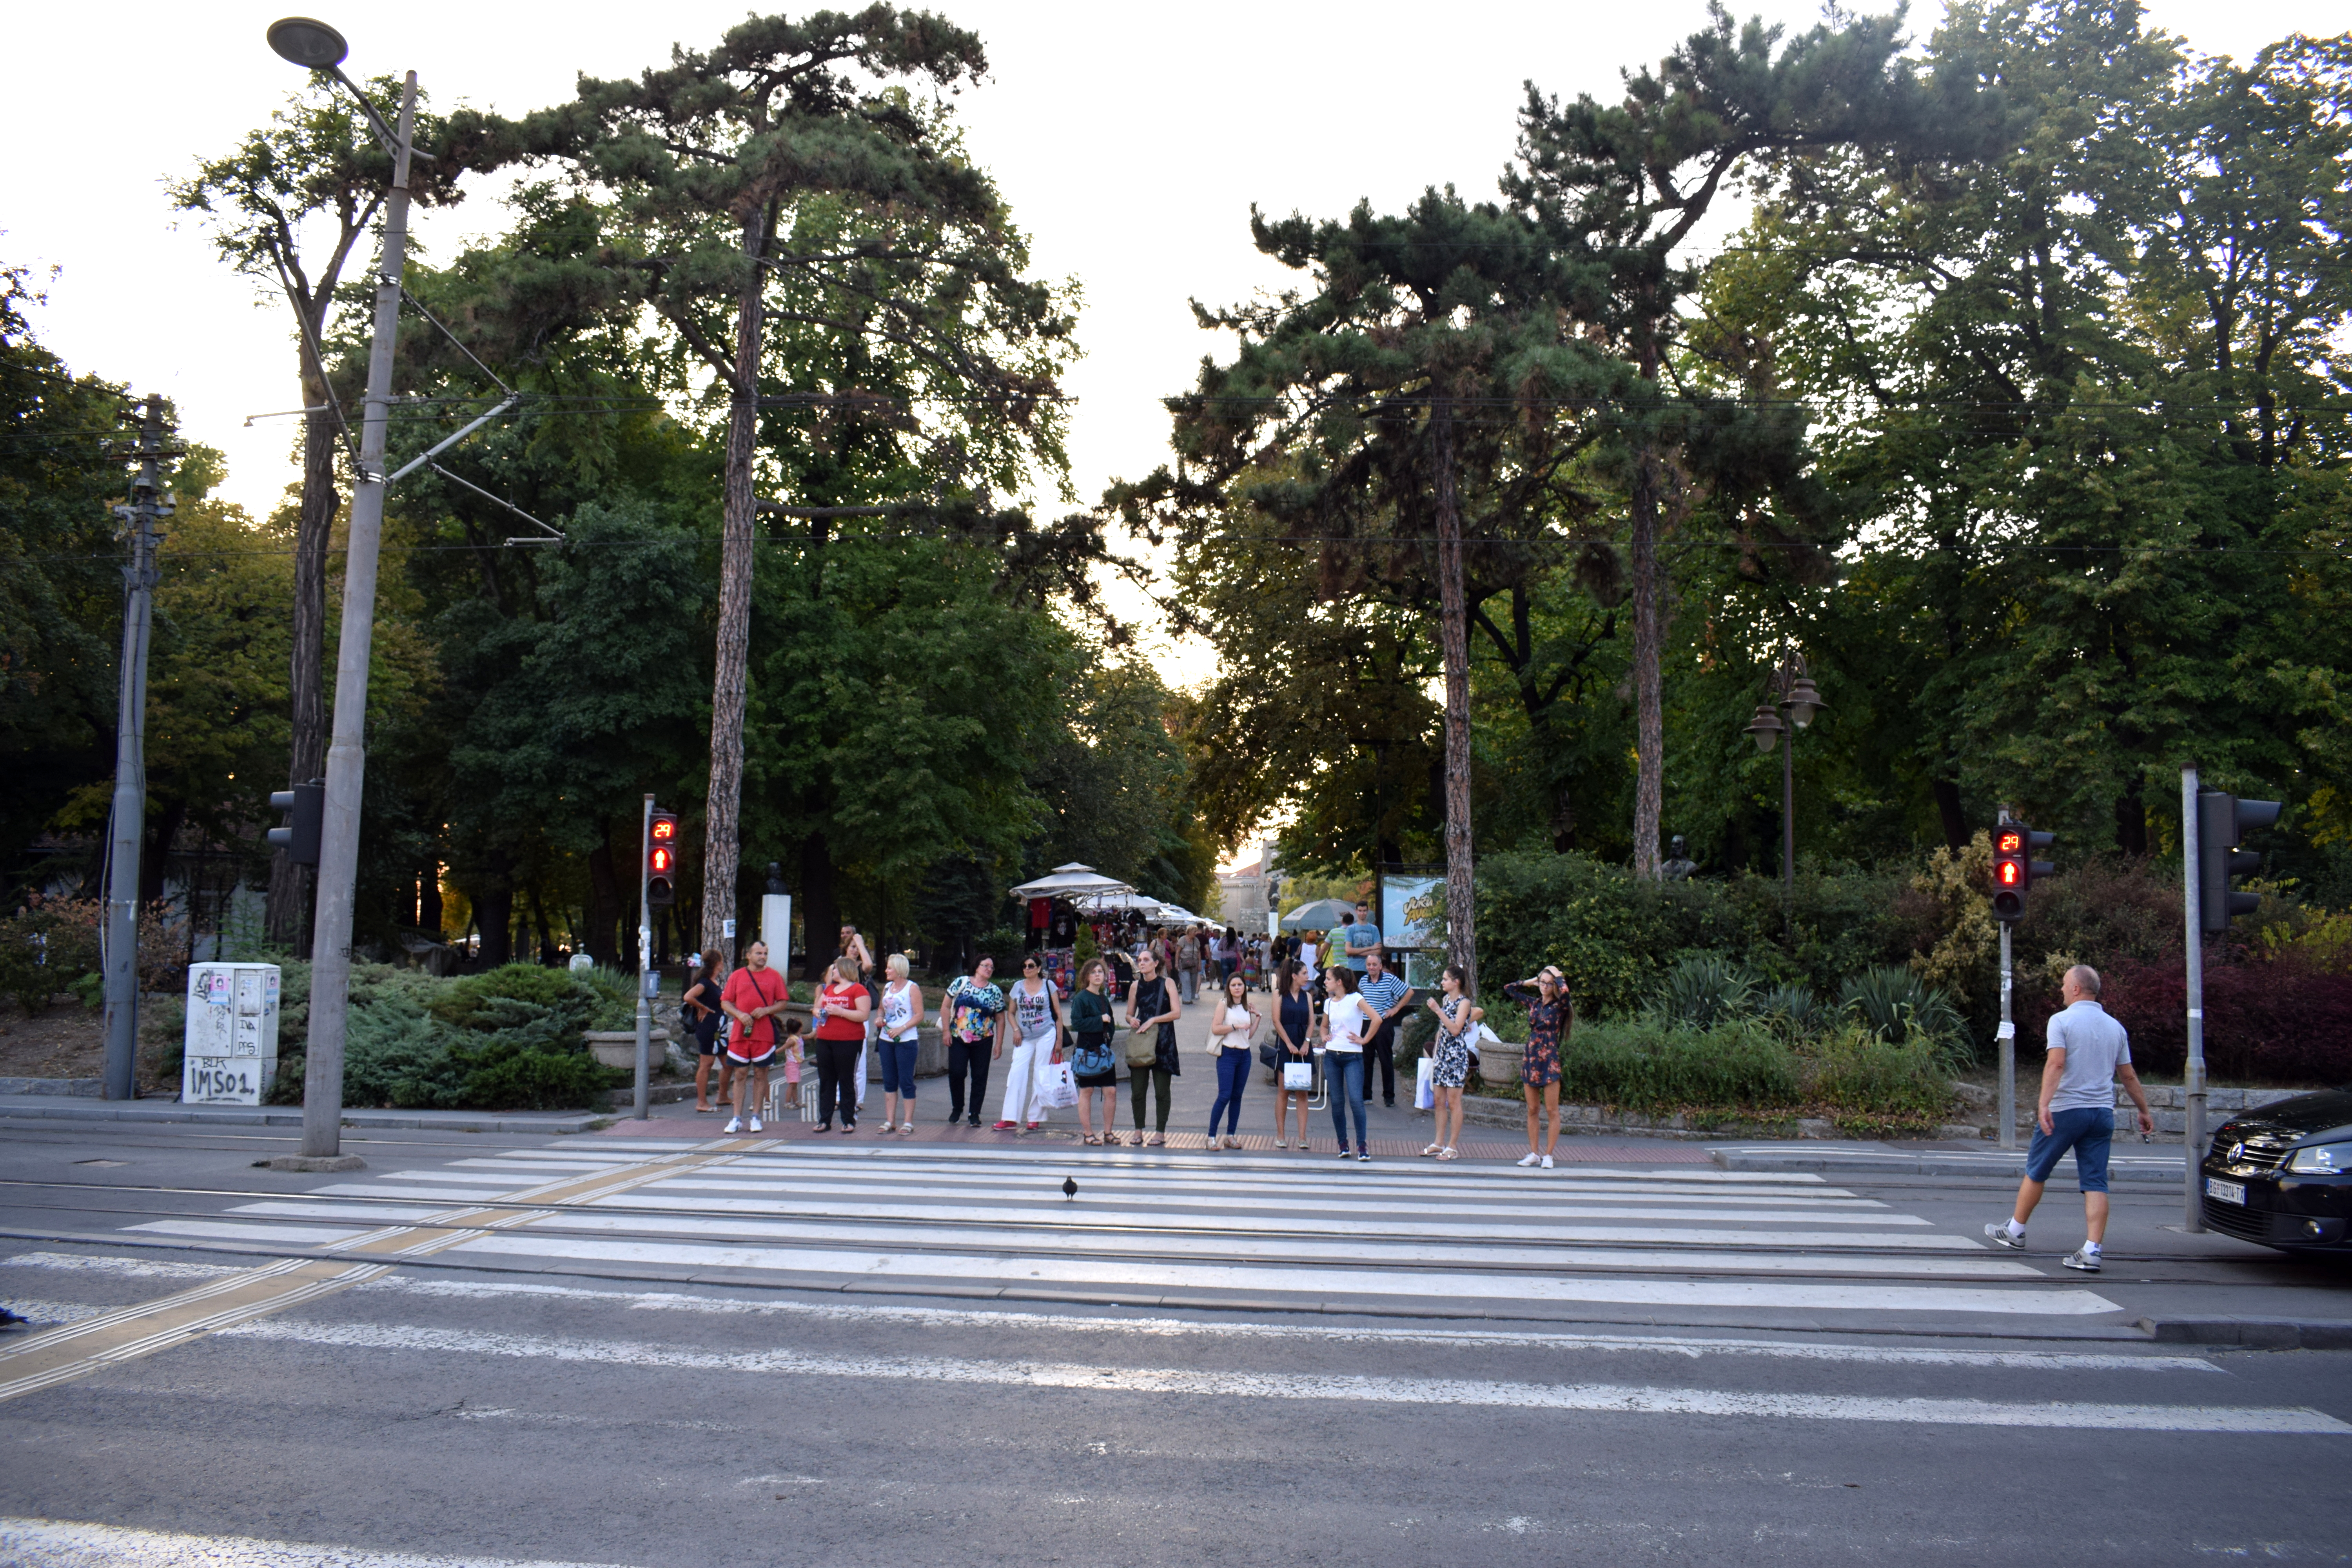 Entrance to Kalemegdan Park in Belgrade, Serbia